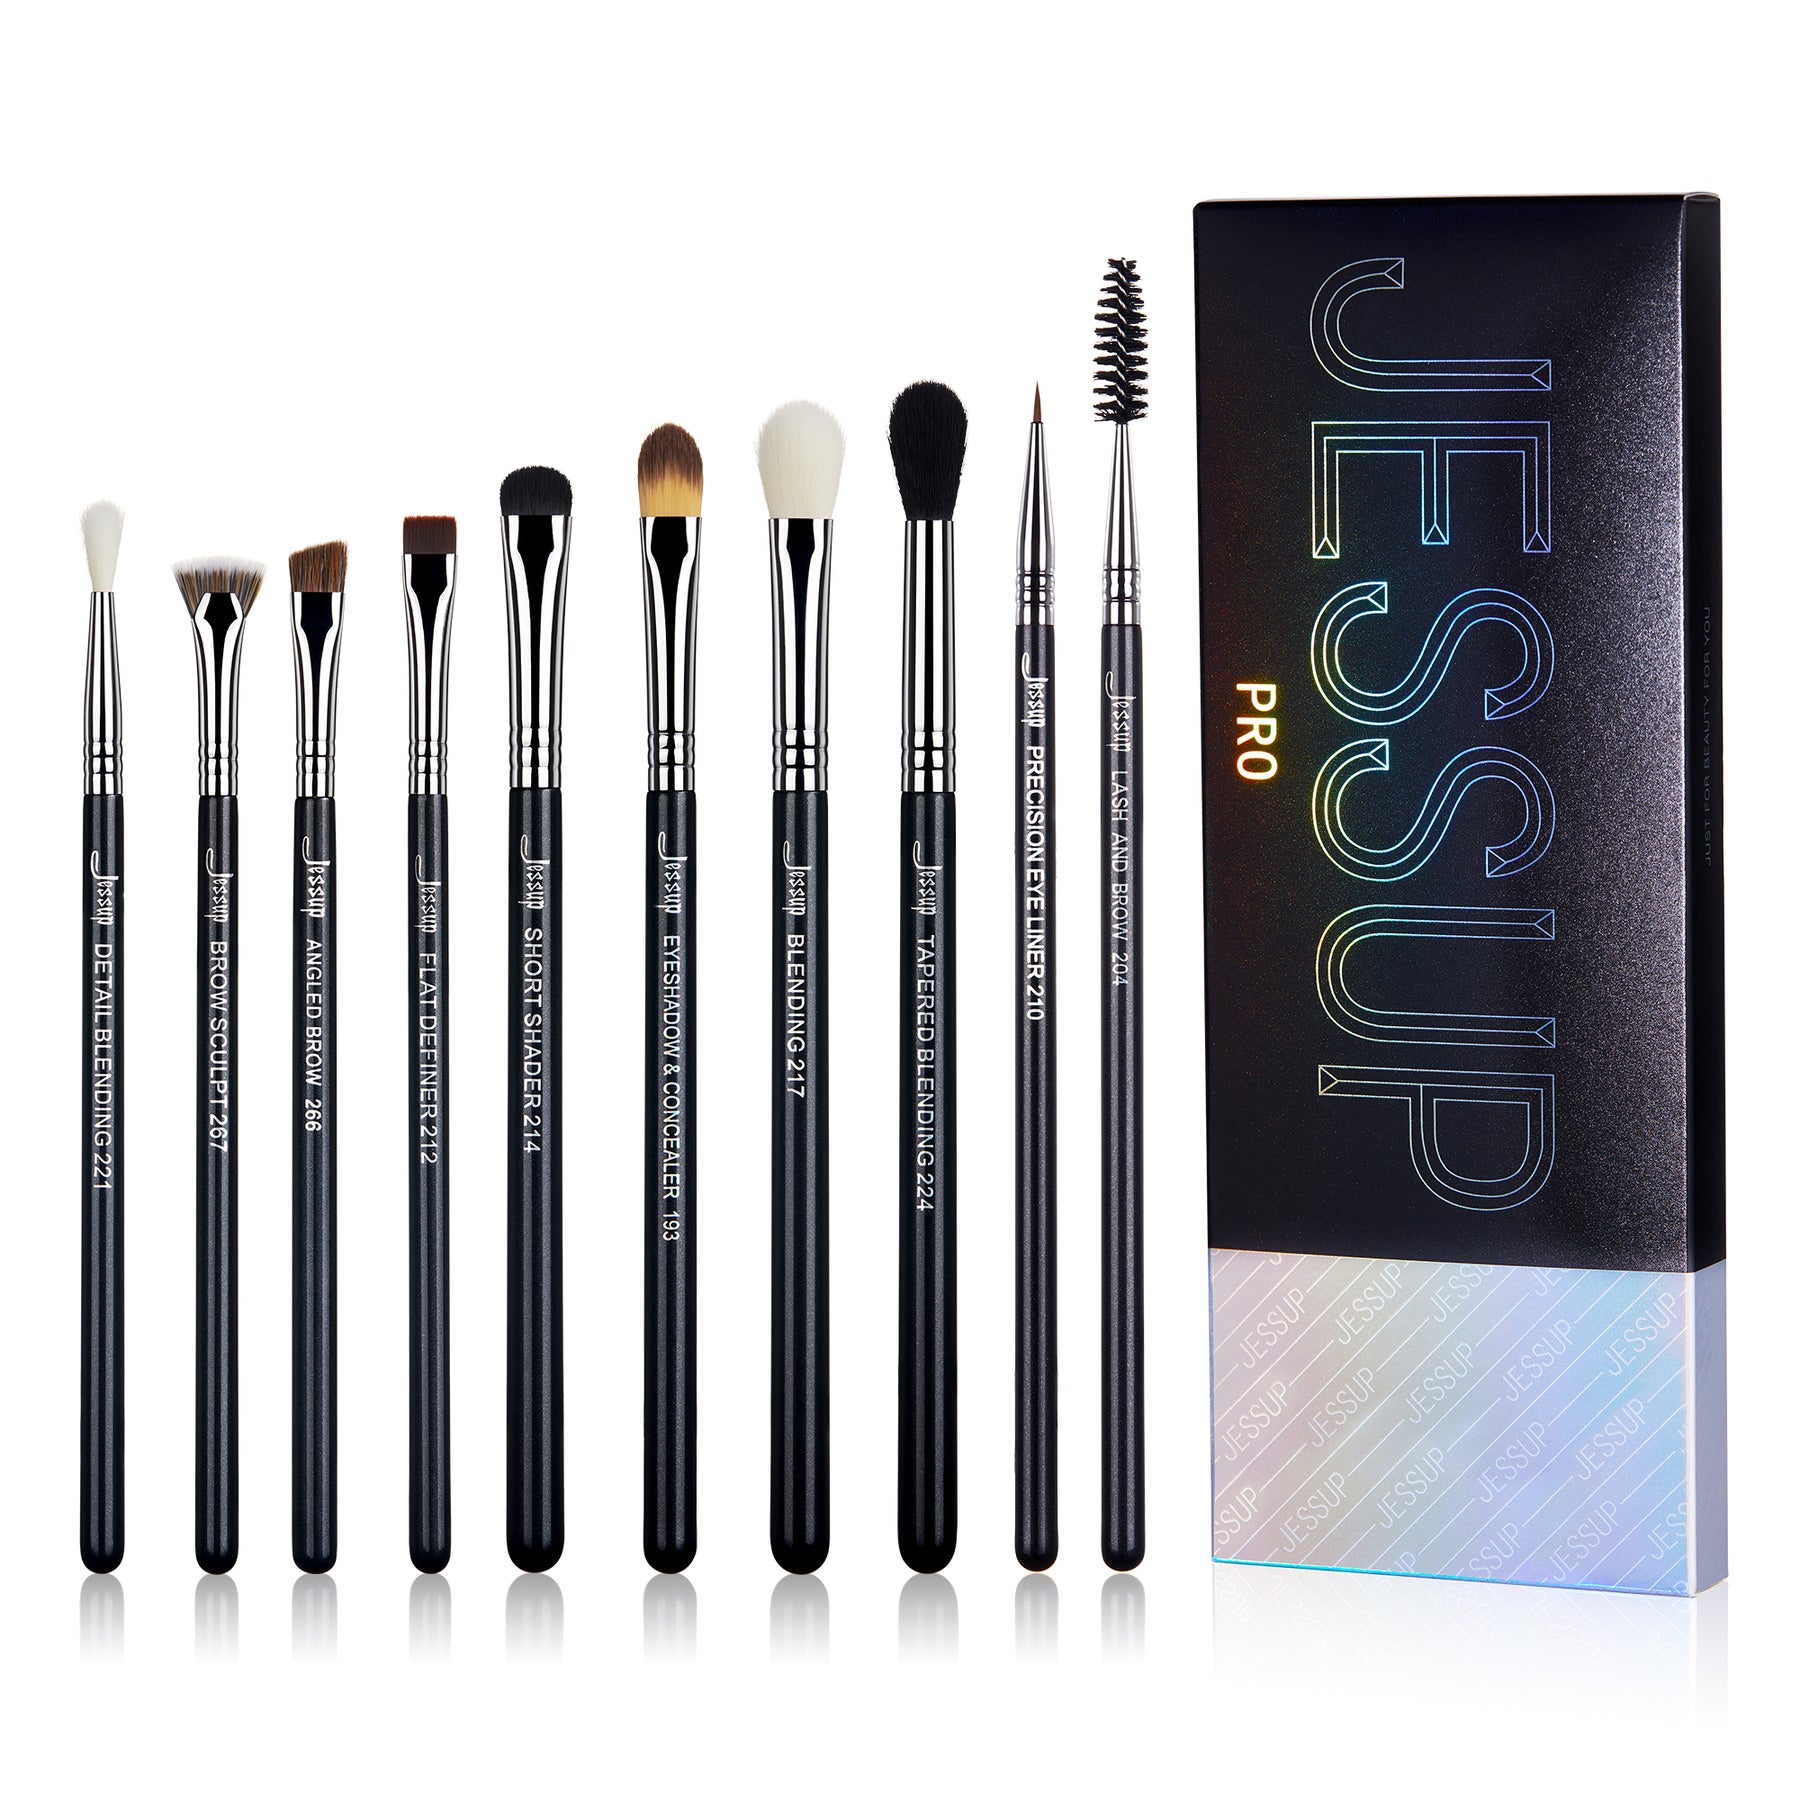 Jessup Eye Makeup Brush Set Professional 15pcs White/Rose Gold Premium  Natural-synthetic Eye Shadow Blending Concealer Eye & Brow Liner Brushes,  T217